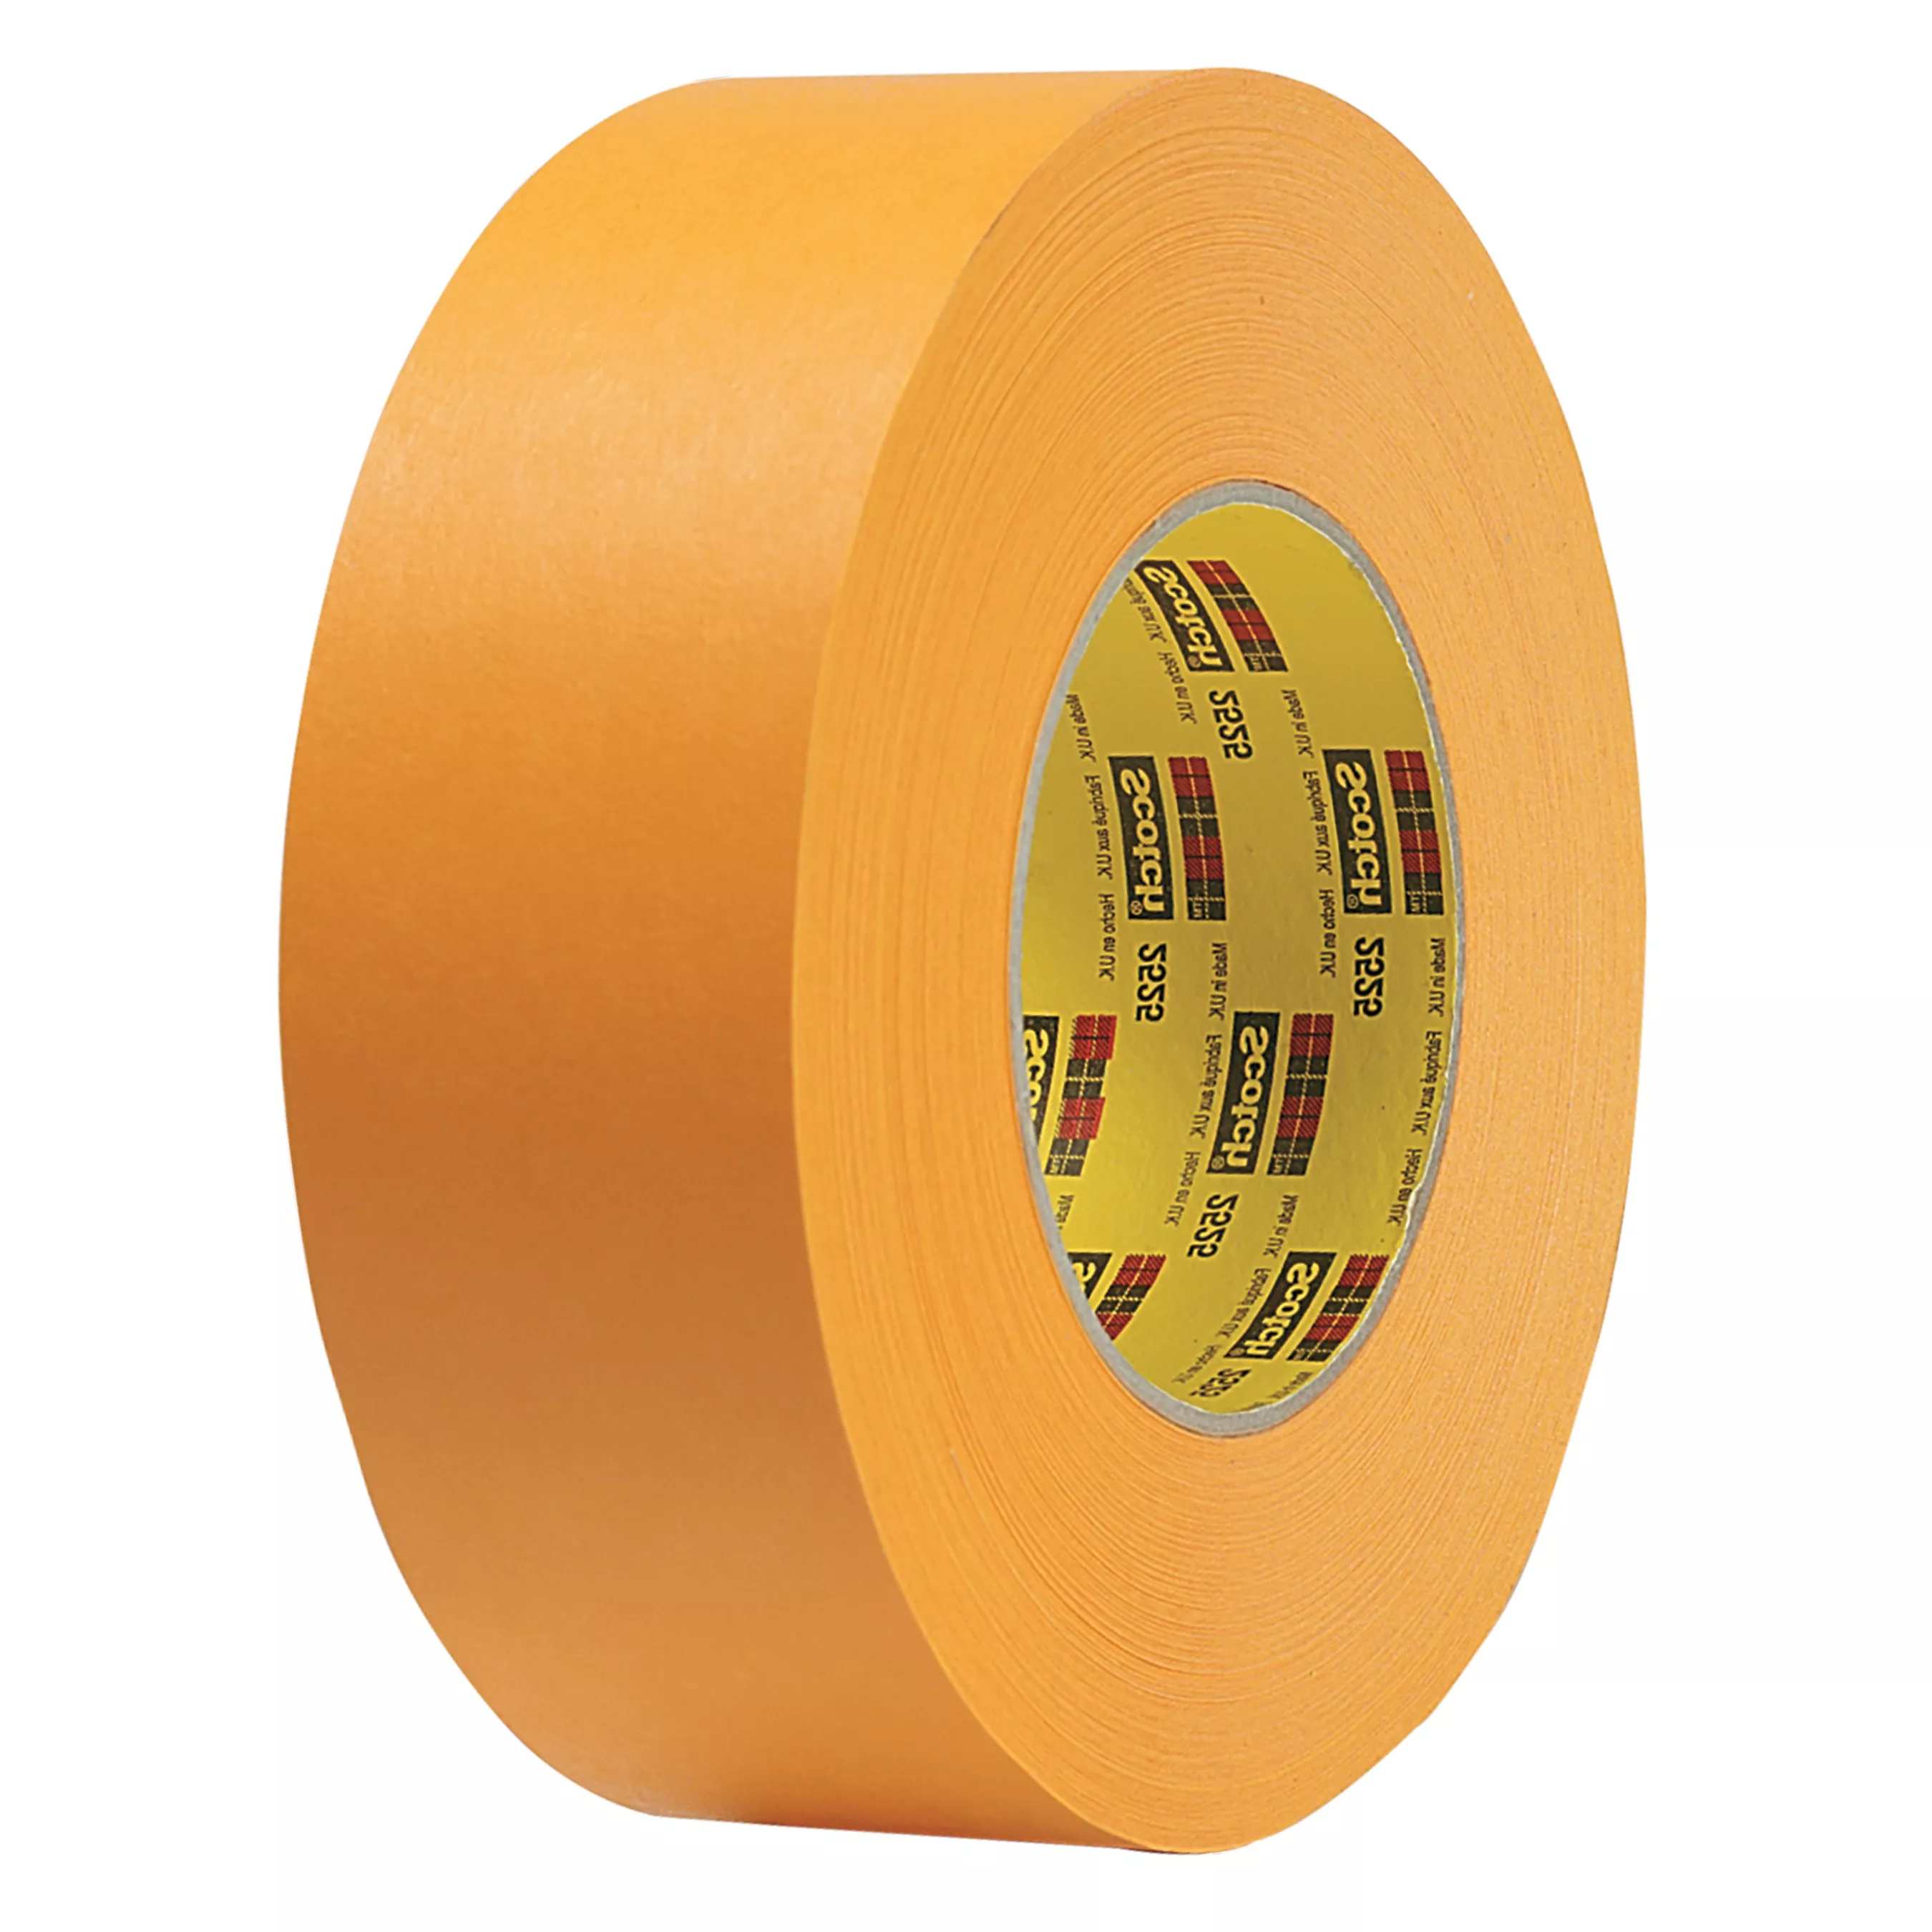 3M™ Performance Flatback Tape 2525, Orange, 36 mm x 55 m, 9.5 mil, 24
Rolls/Case